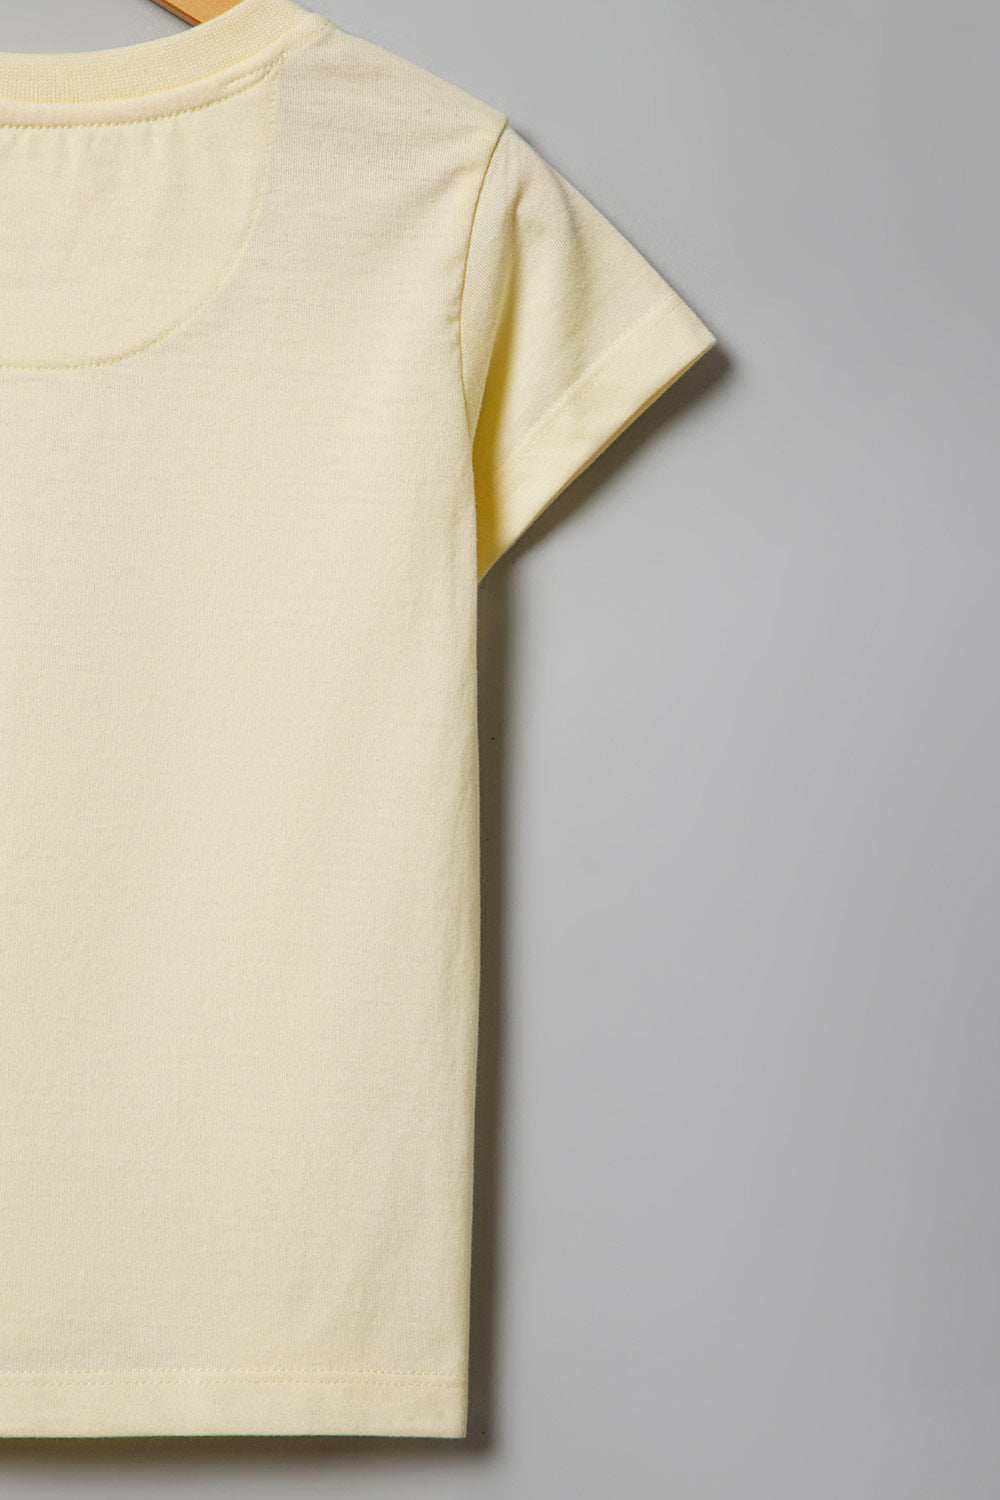 The Young Future Girls T-shirt - Light Yellow - GT07